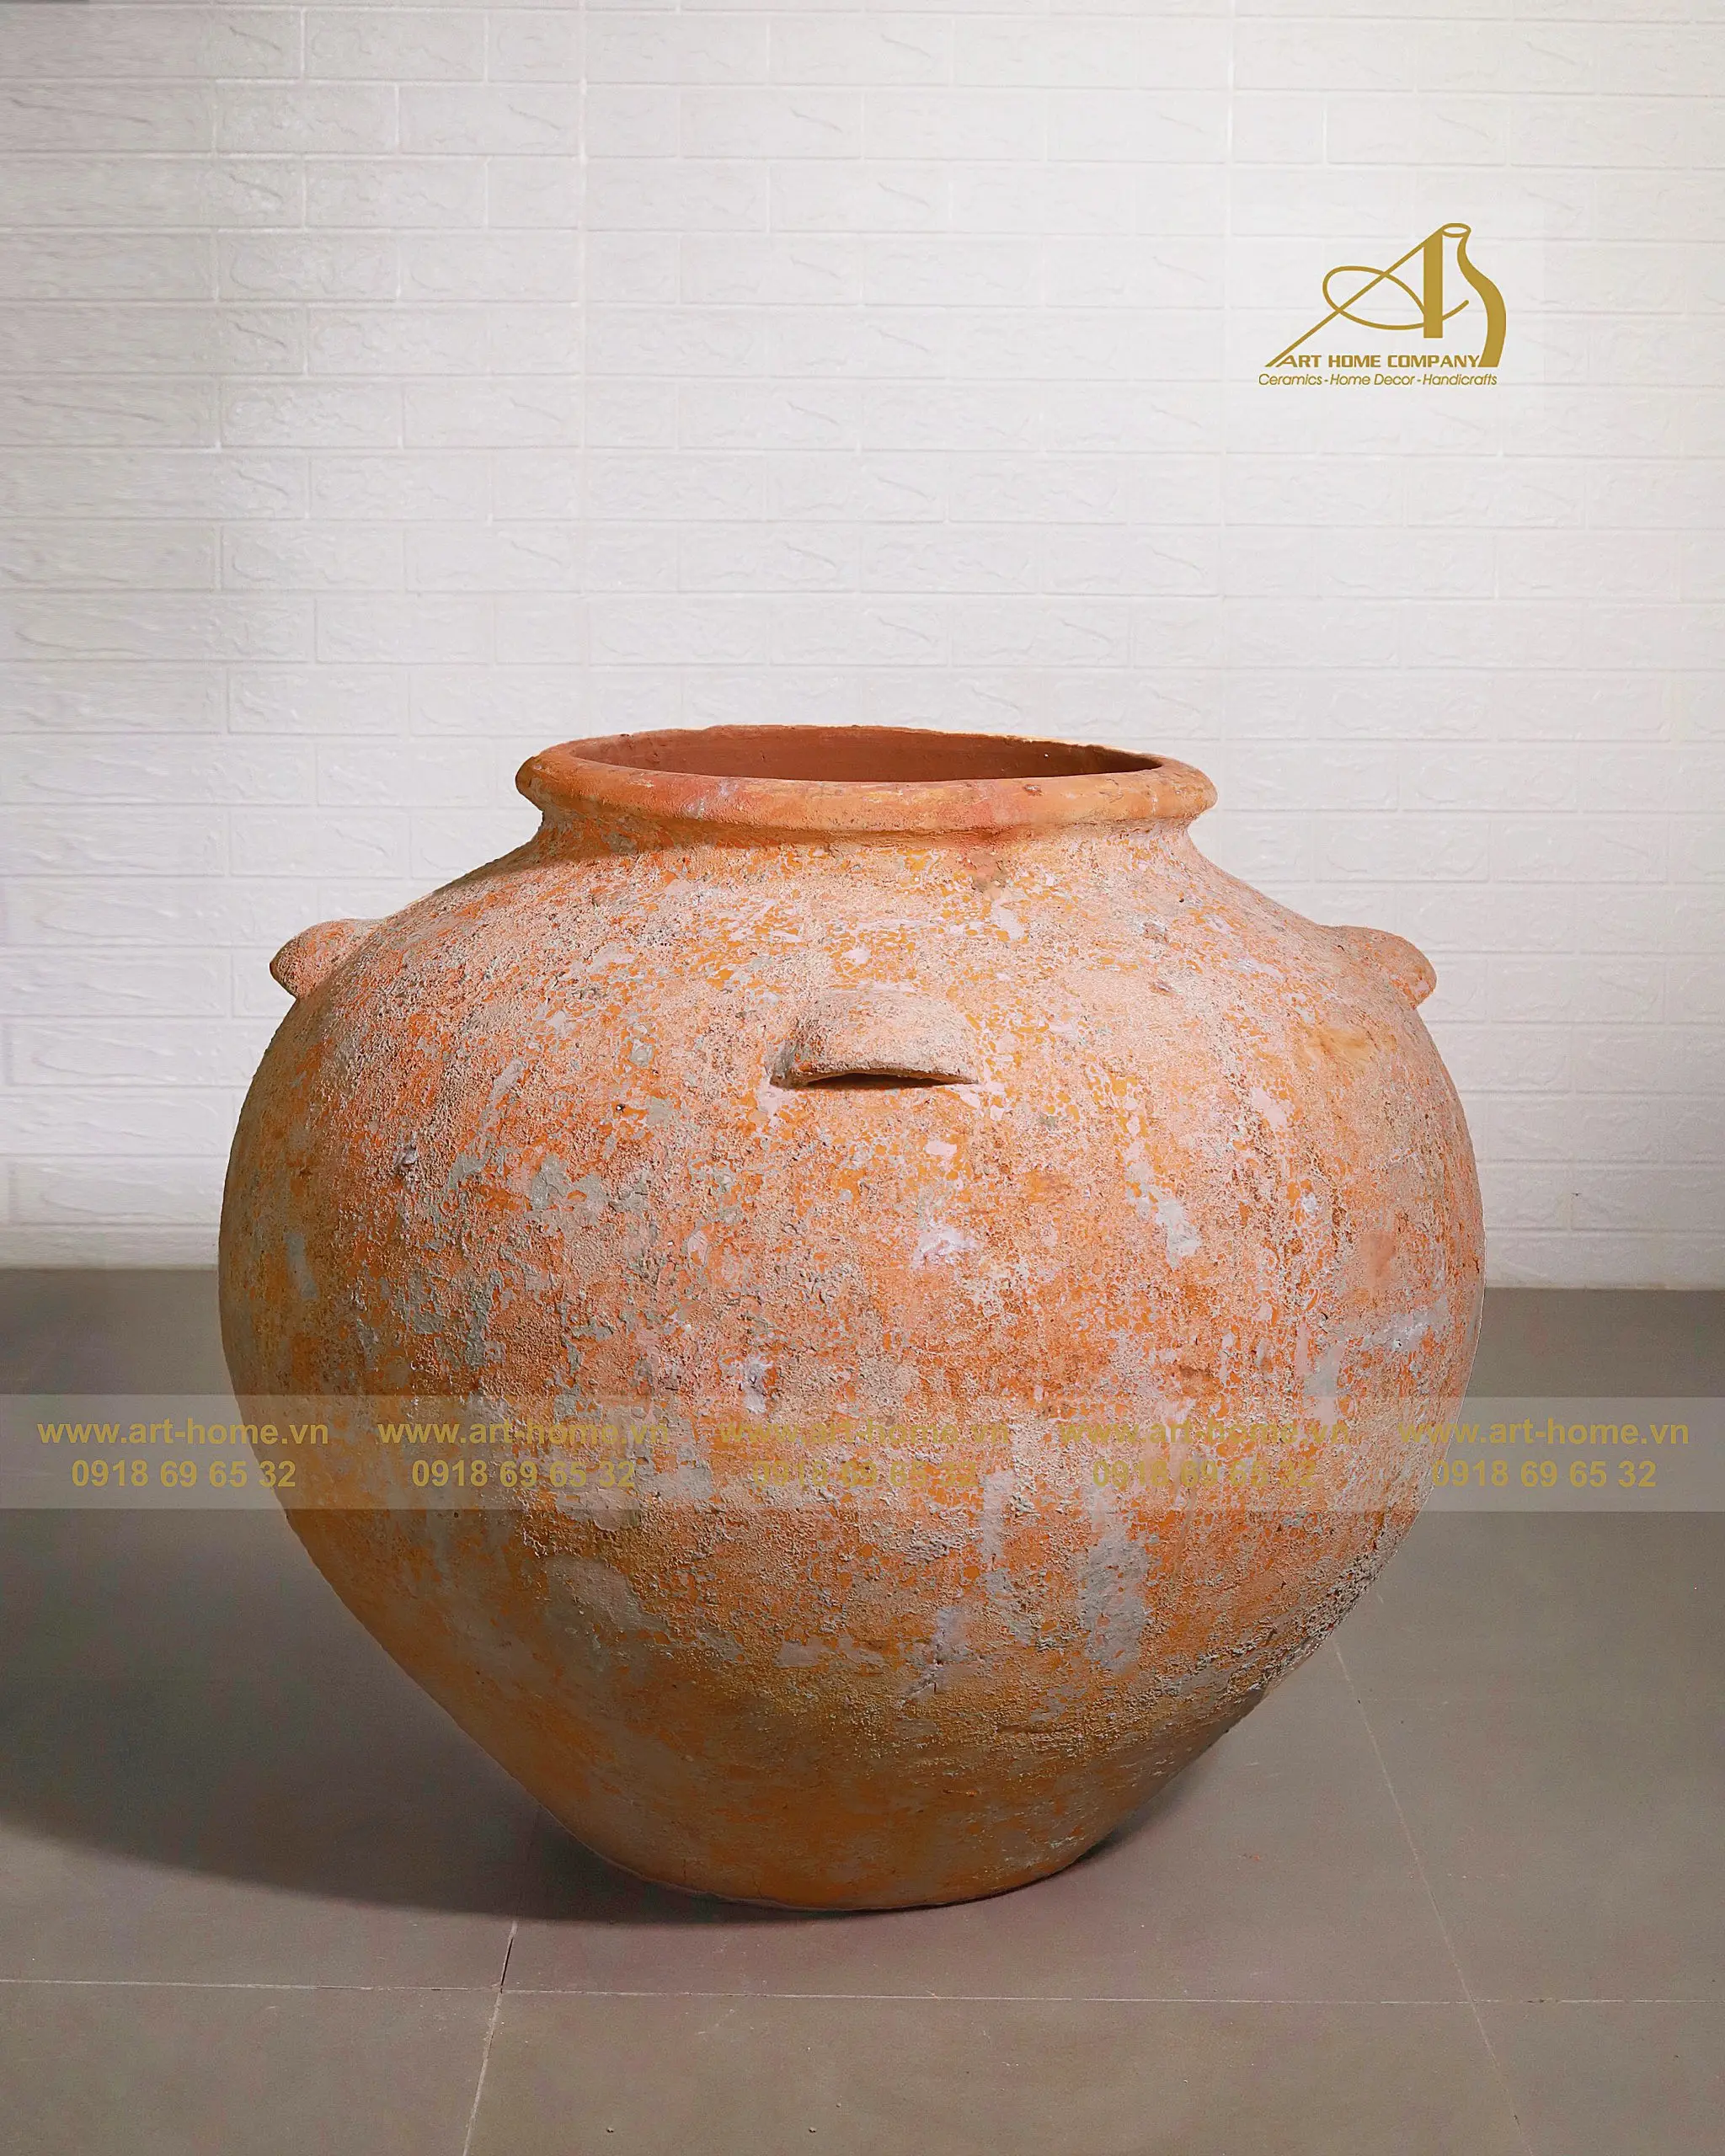 Art-home Ceramics OCEAN ORANGE OC066H73 Pot With 2 Handles Suitable For Planting Garden Decoration And Mini Landscaping